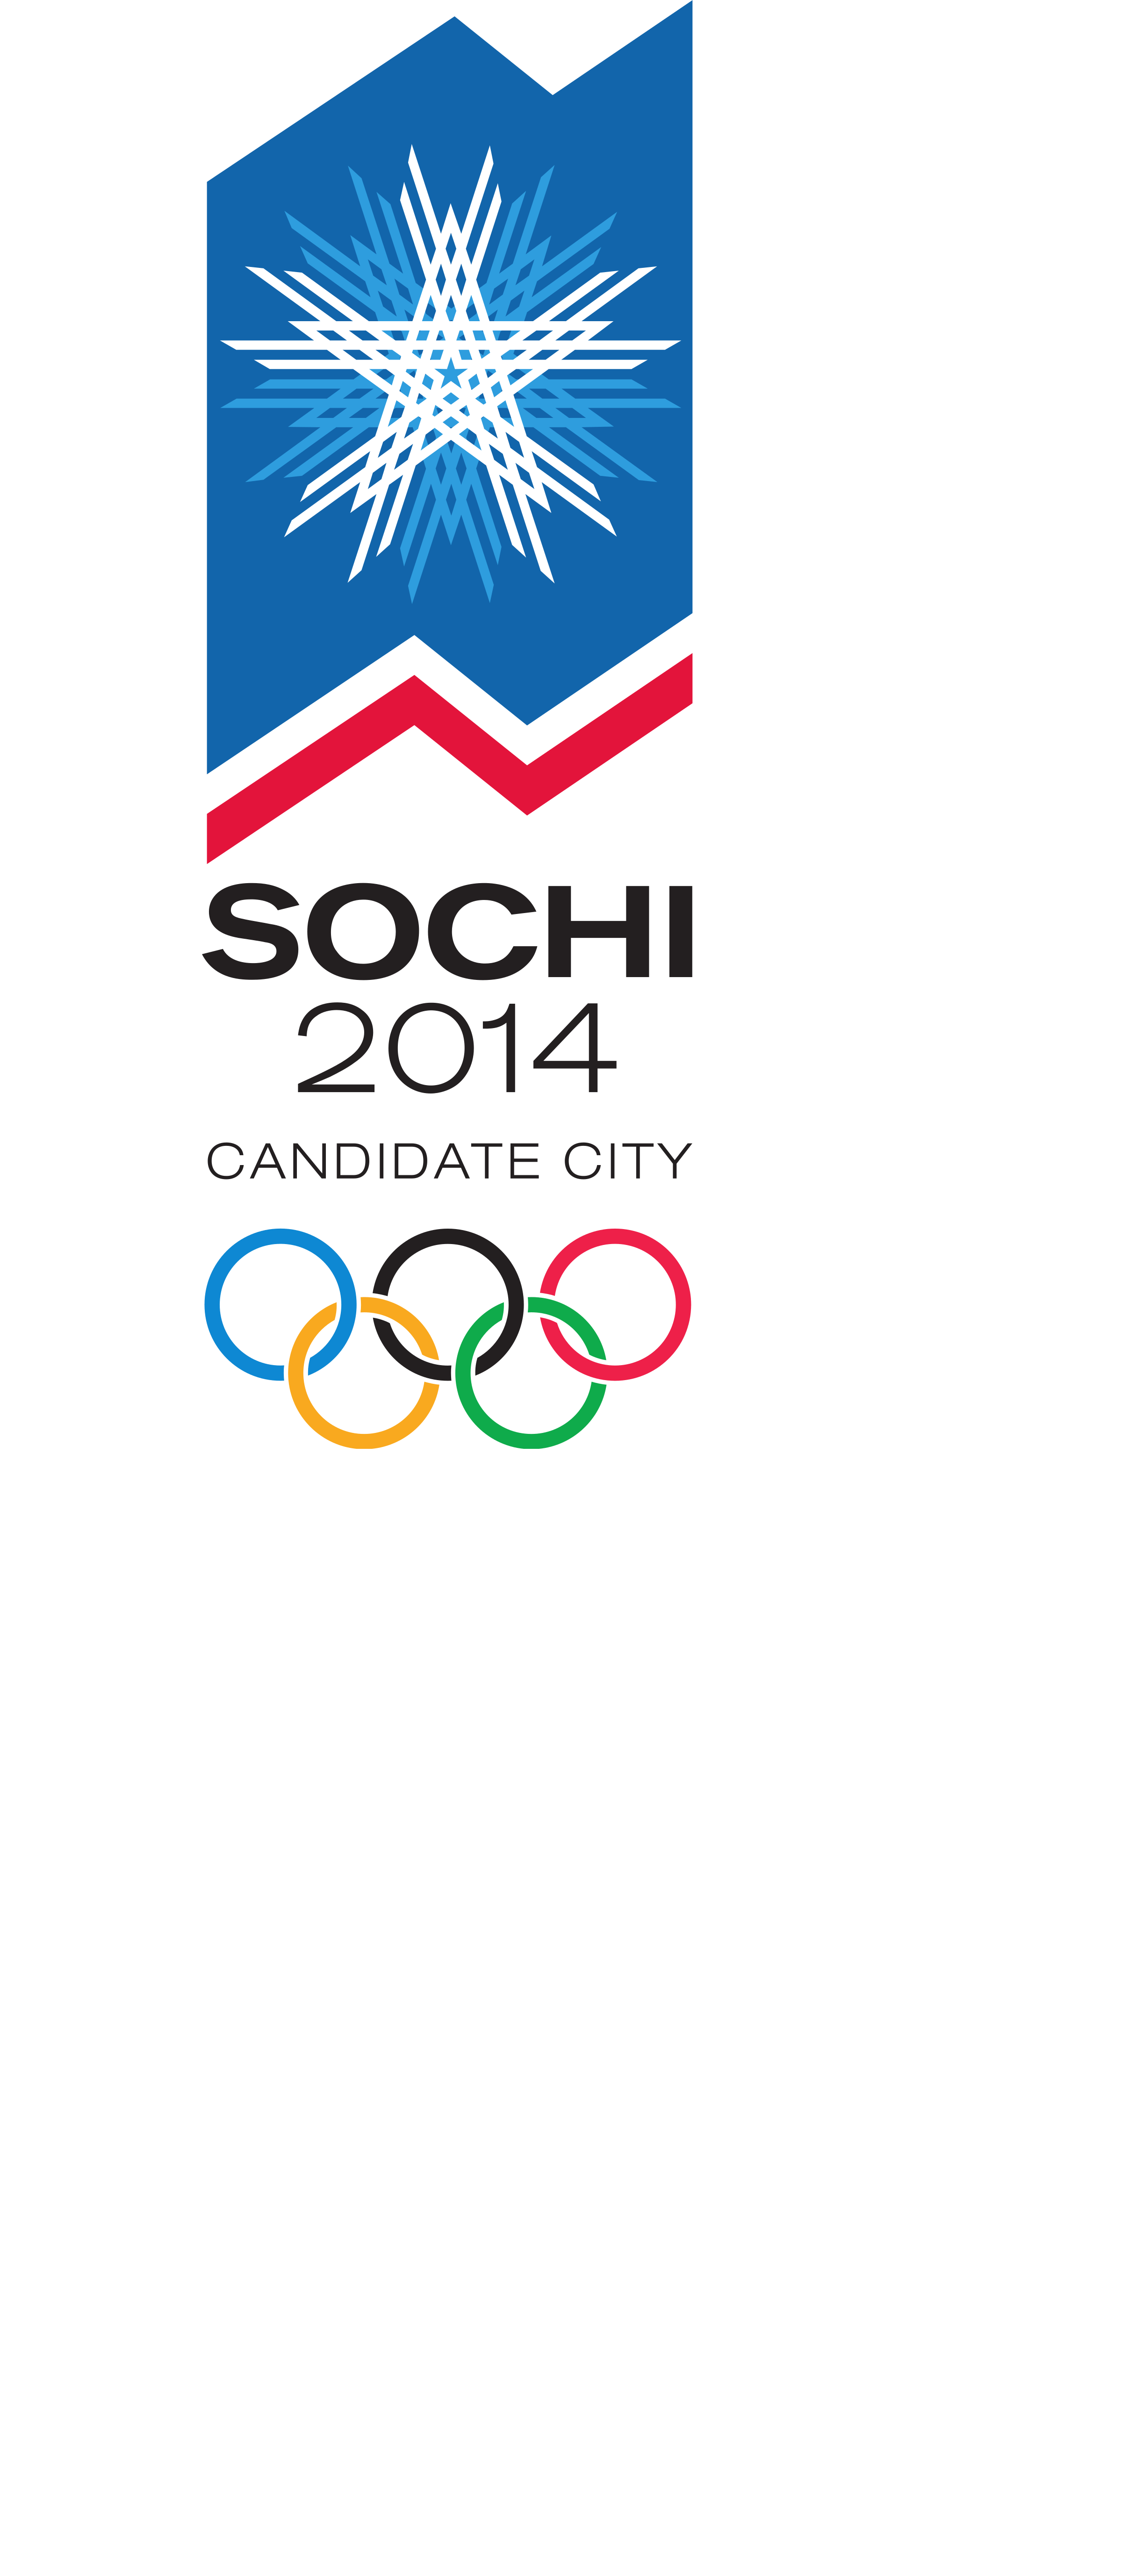 Sochi Logo - Sochi 2014 Winter Olympics Logo PNG Transparent & SVG Vector ...